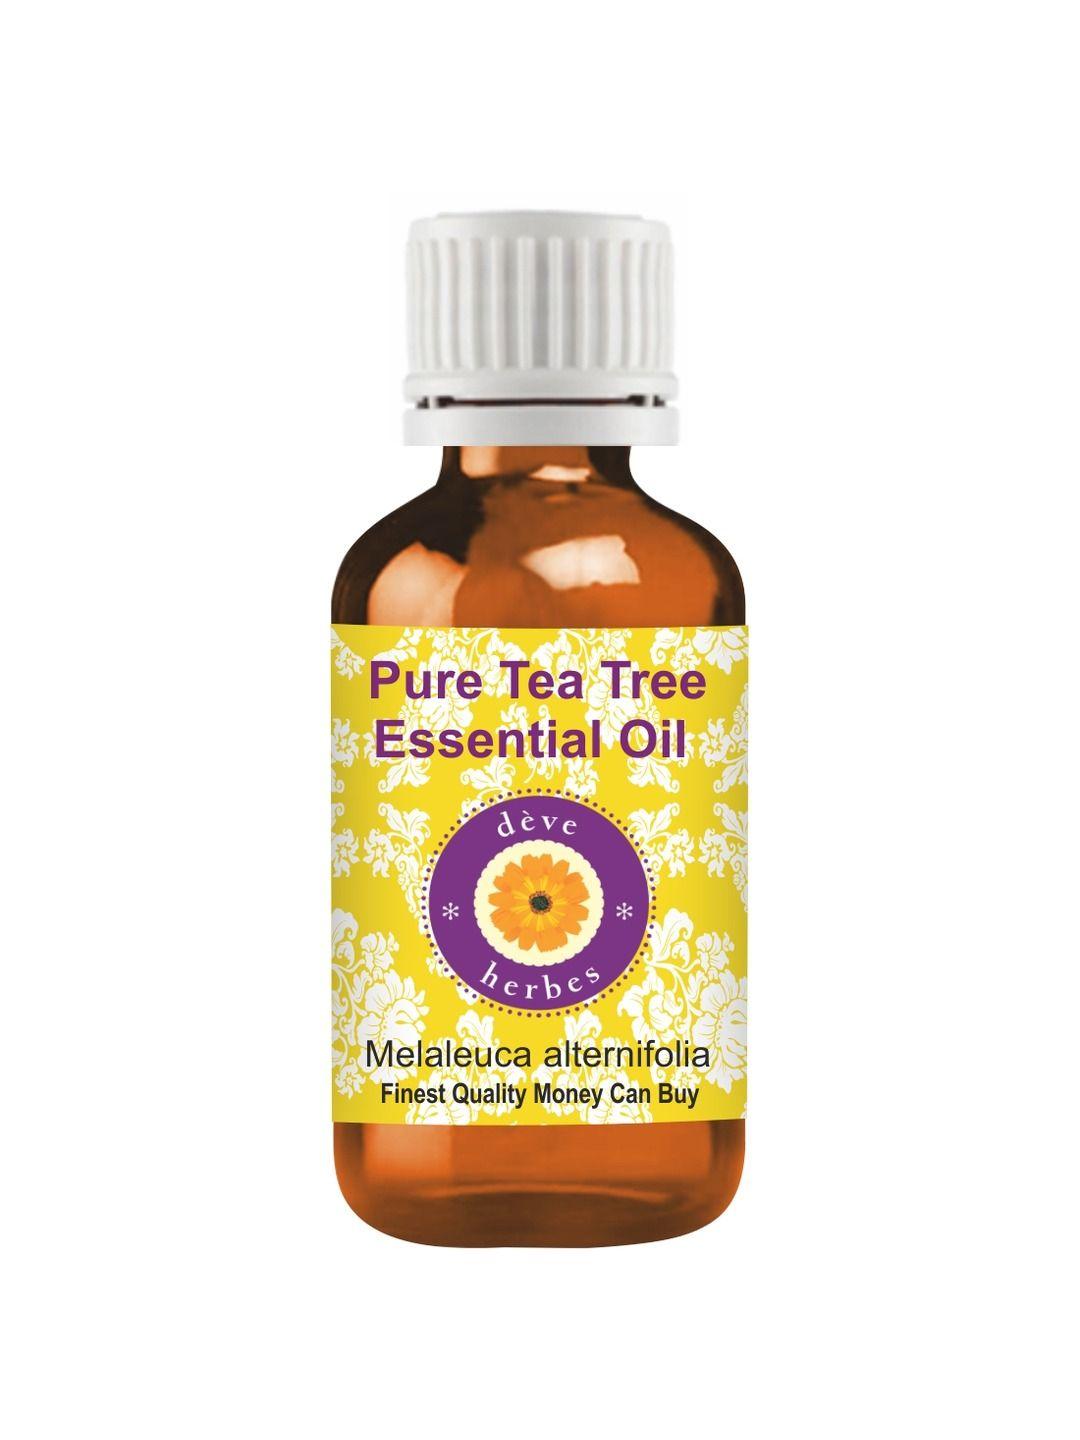 deve herbes natural therapeutic grade steam distilled pure tea tree essential oil - 100 ml